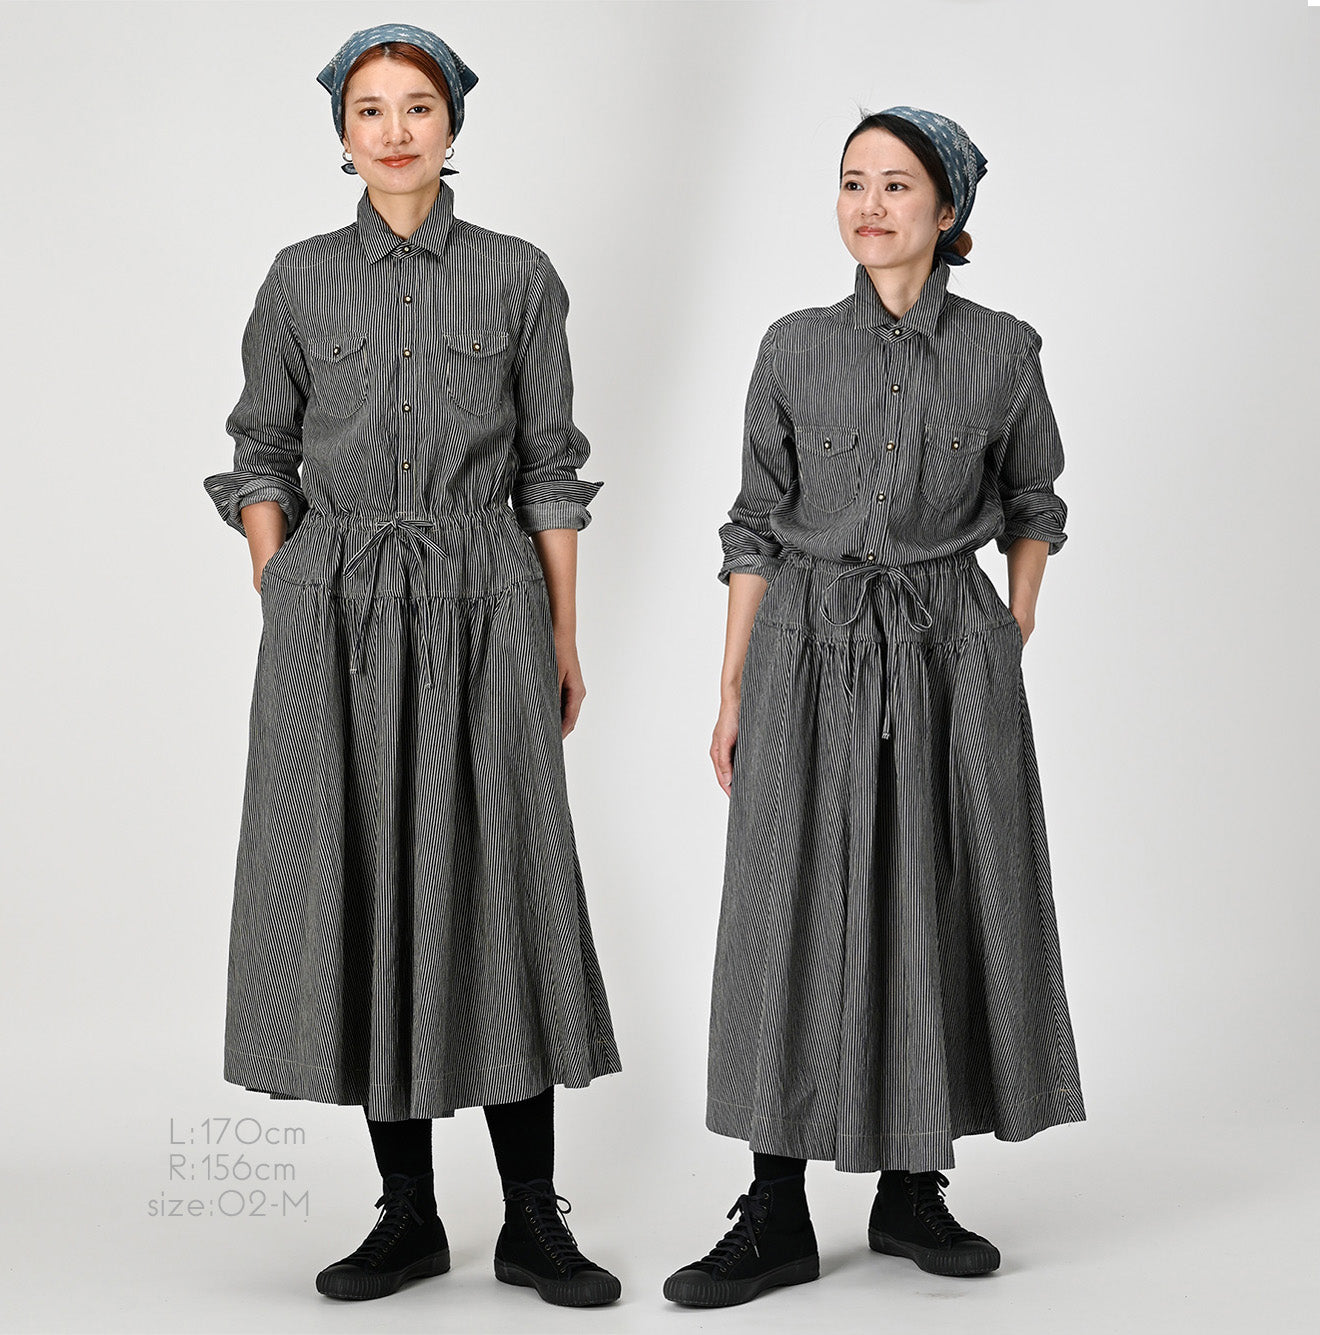 Cottond45R dress